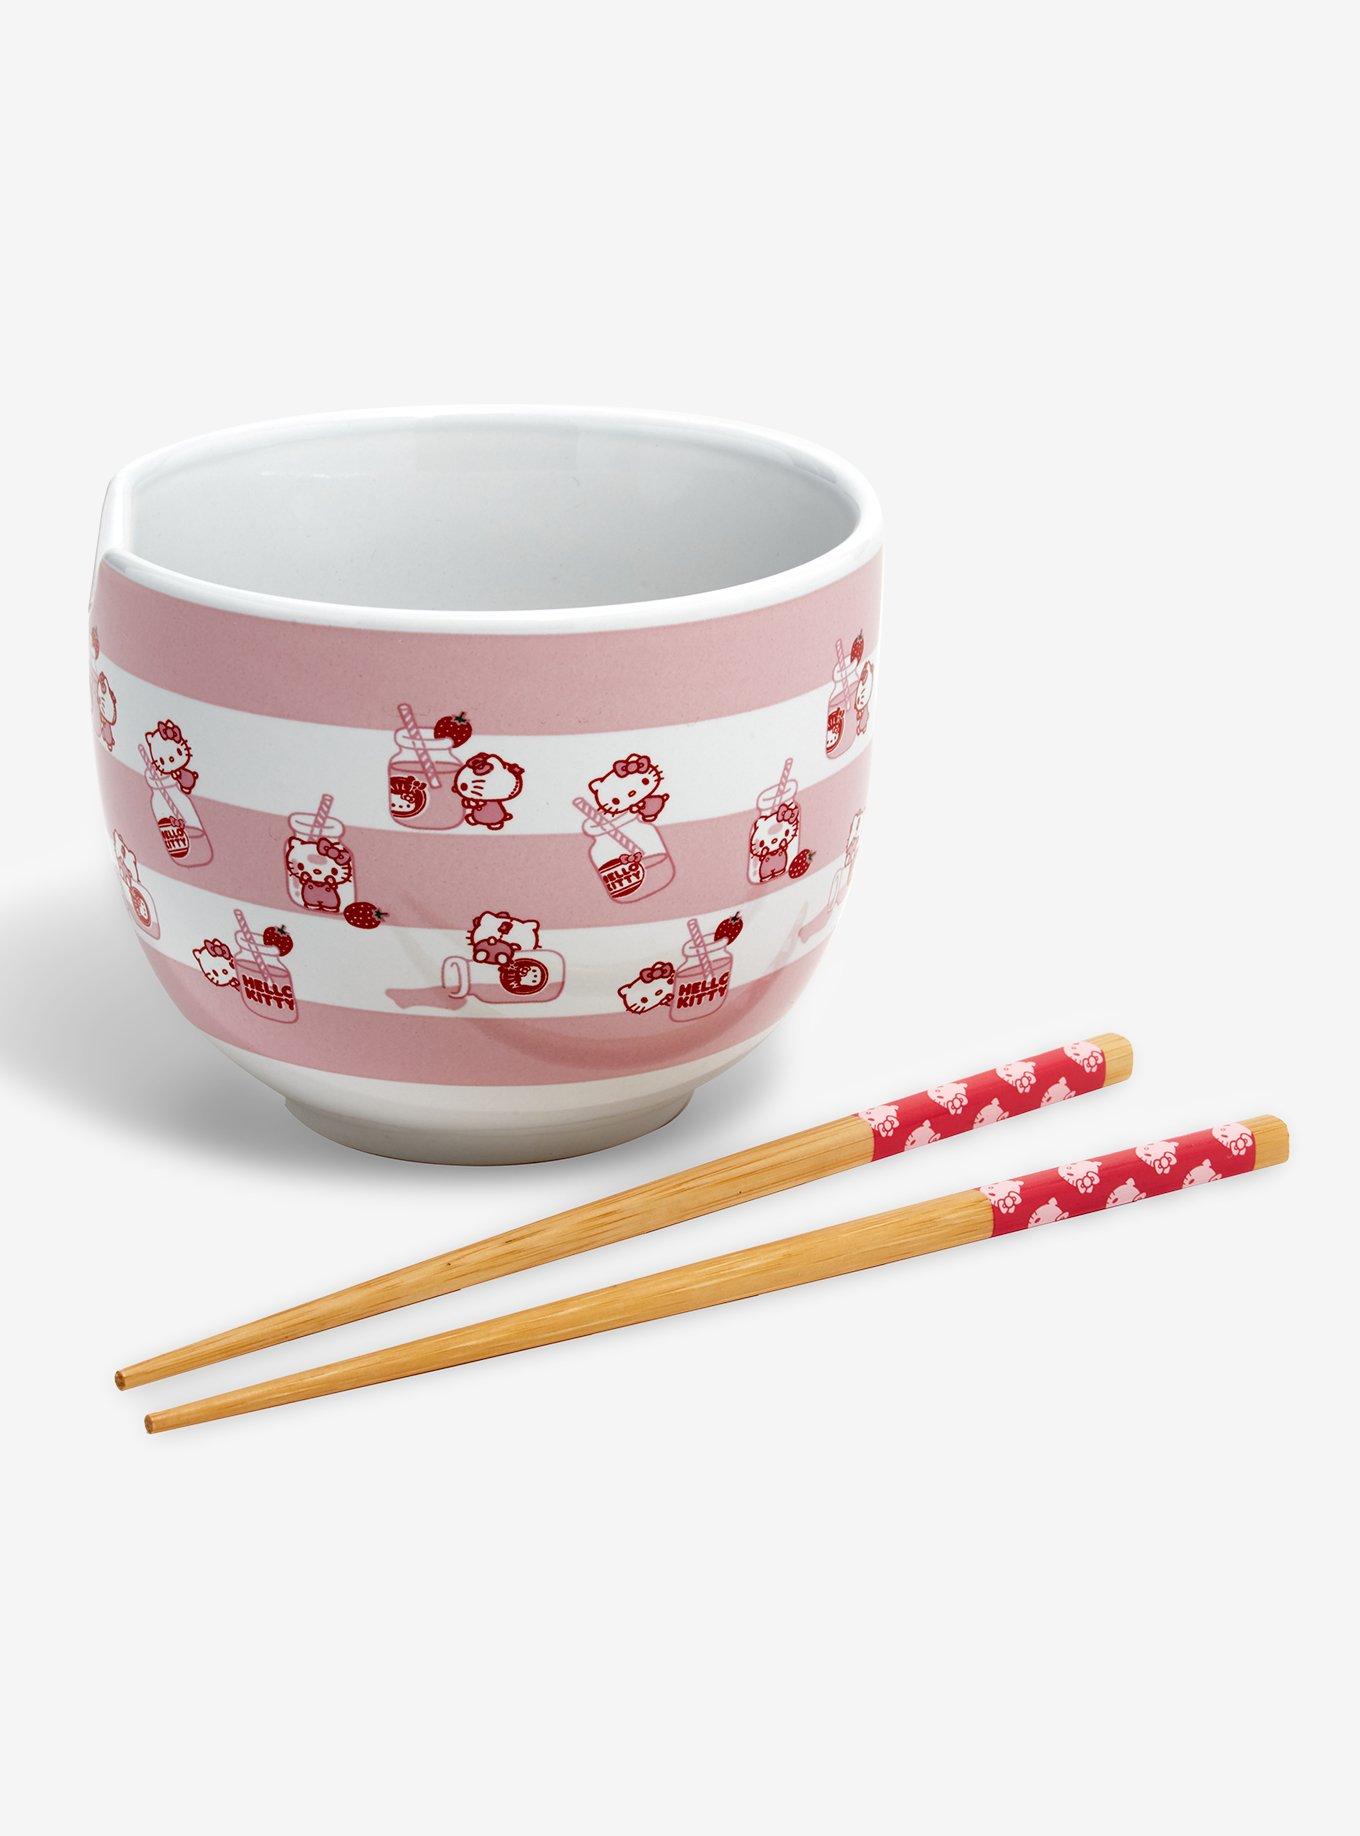 Sanrio Hello Kitty Strawberry Milk Striped Ramen Bowl with